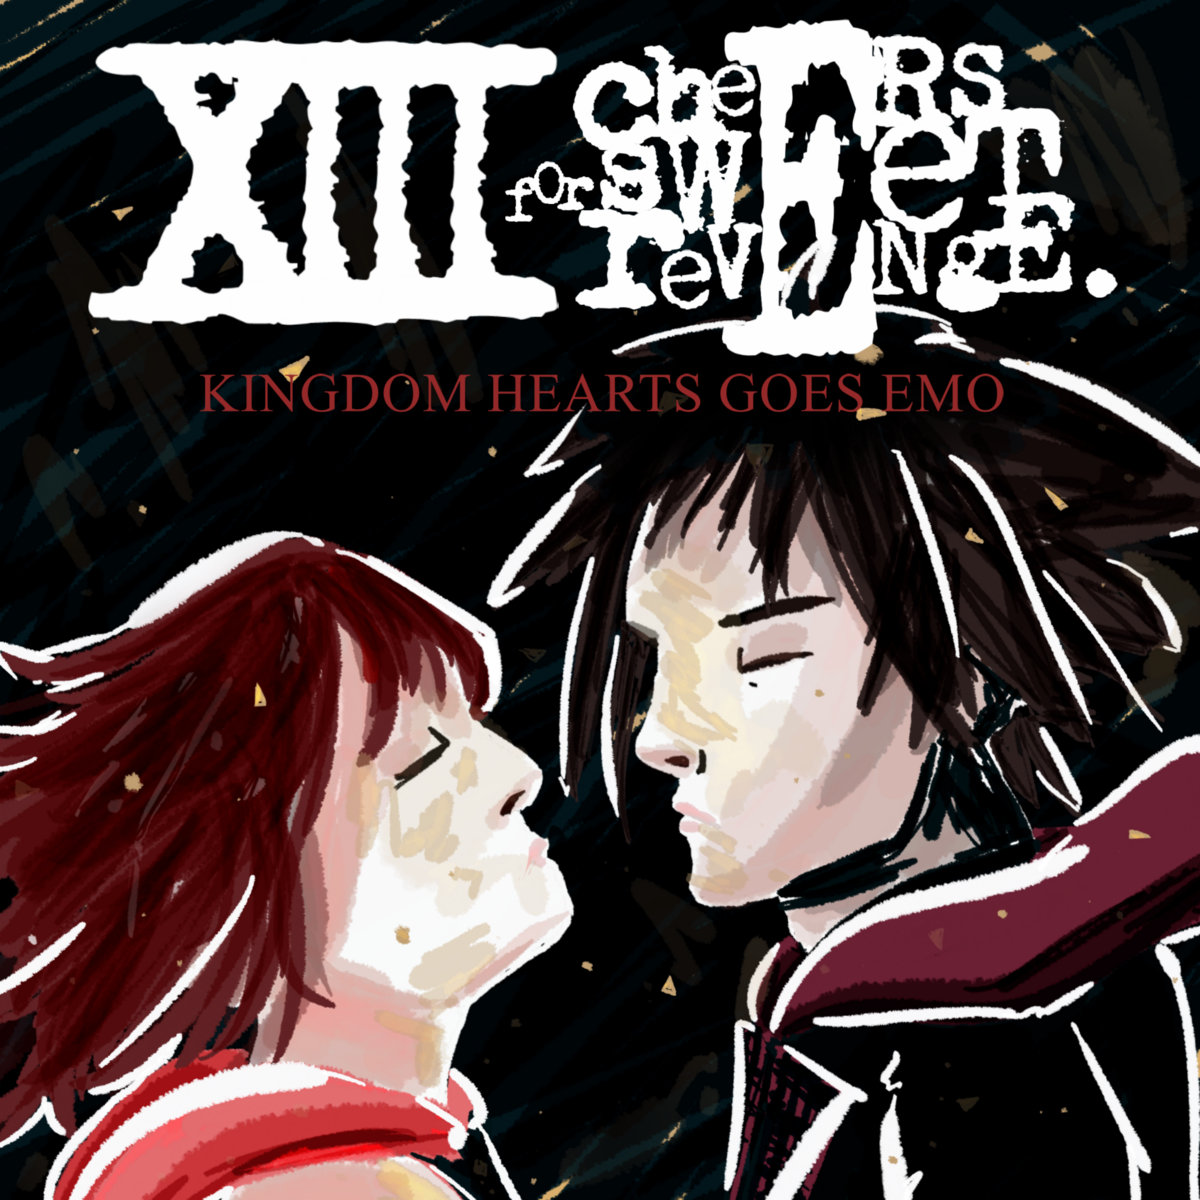 XIII Cheers for Sweet Revenge: Kingdom Hearts Goes Emo